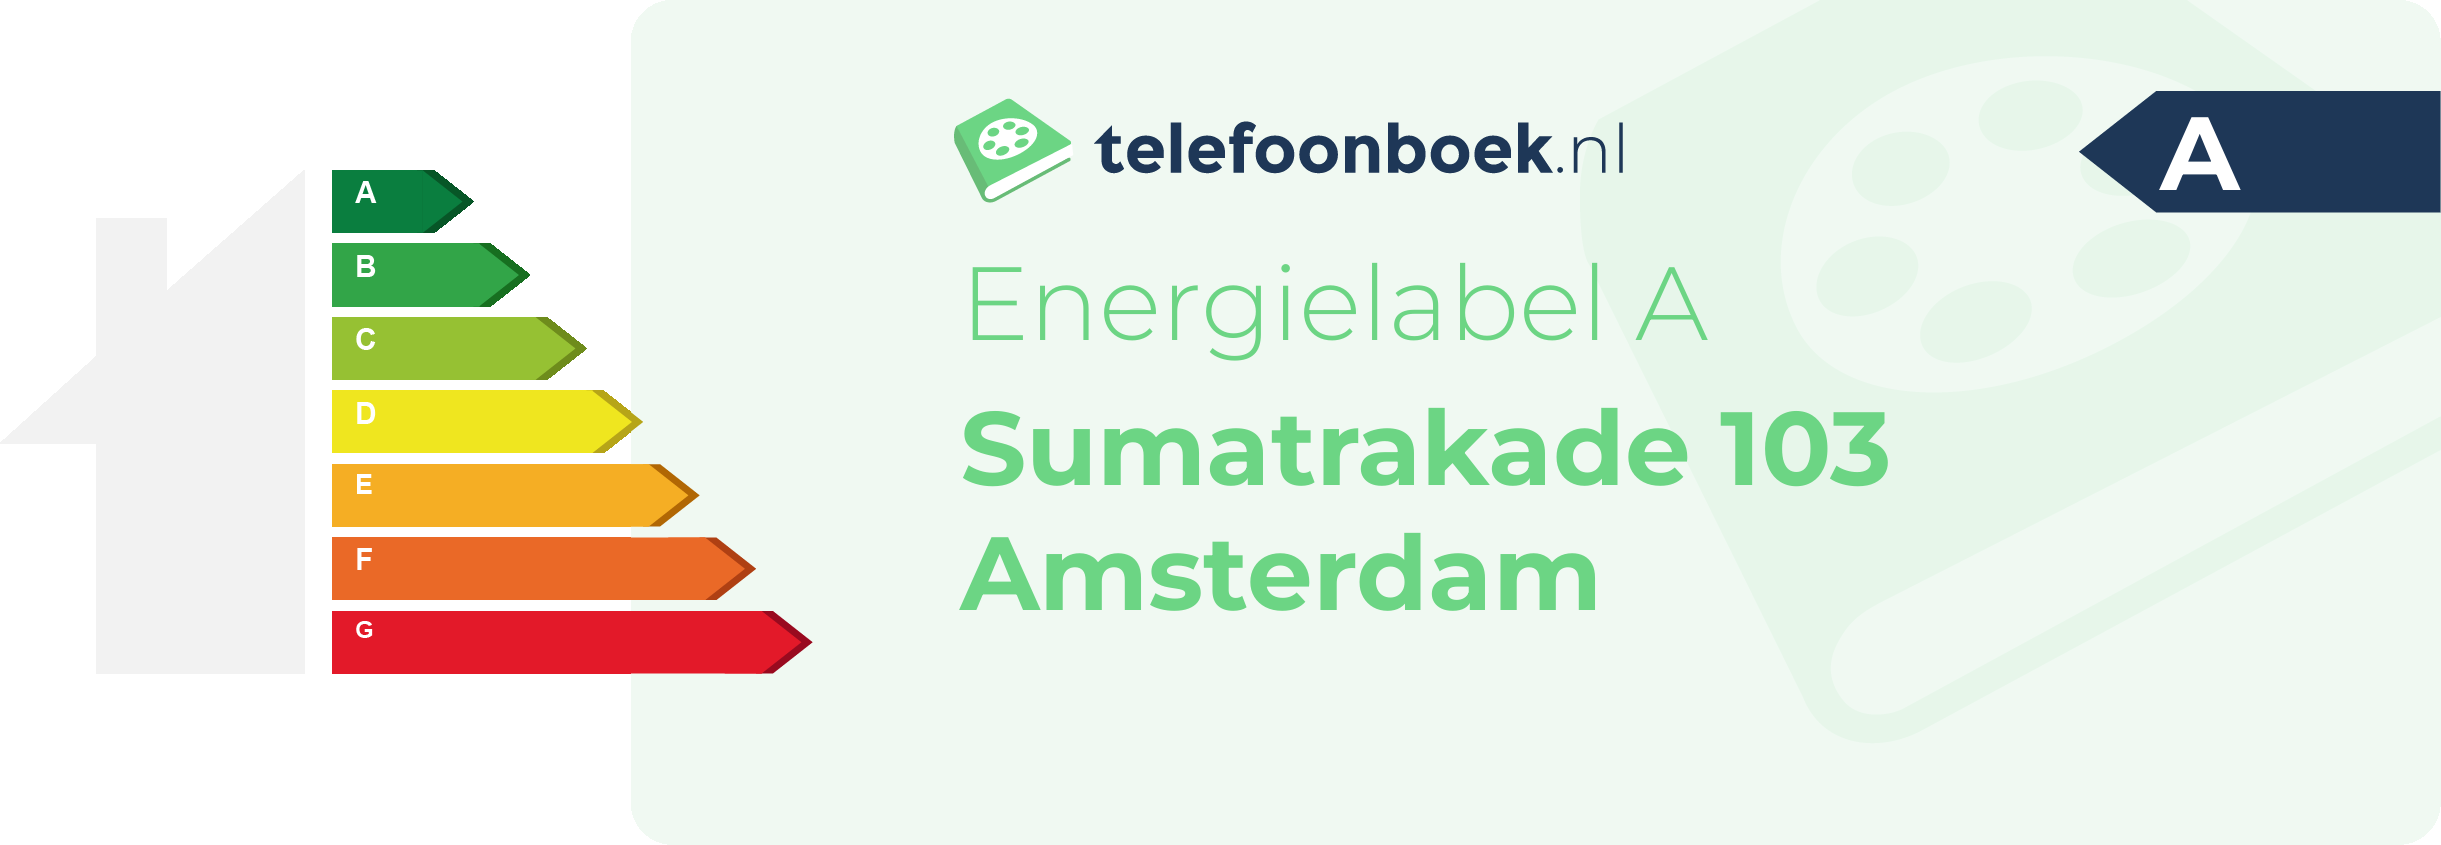 Energielabel Sumatrakade 103 Amsterdam